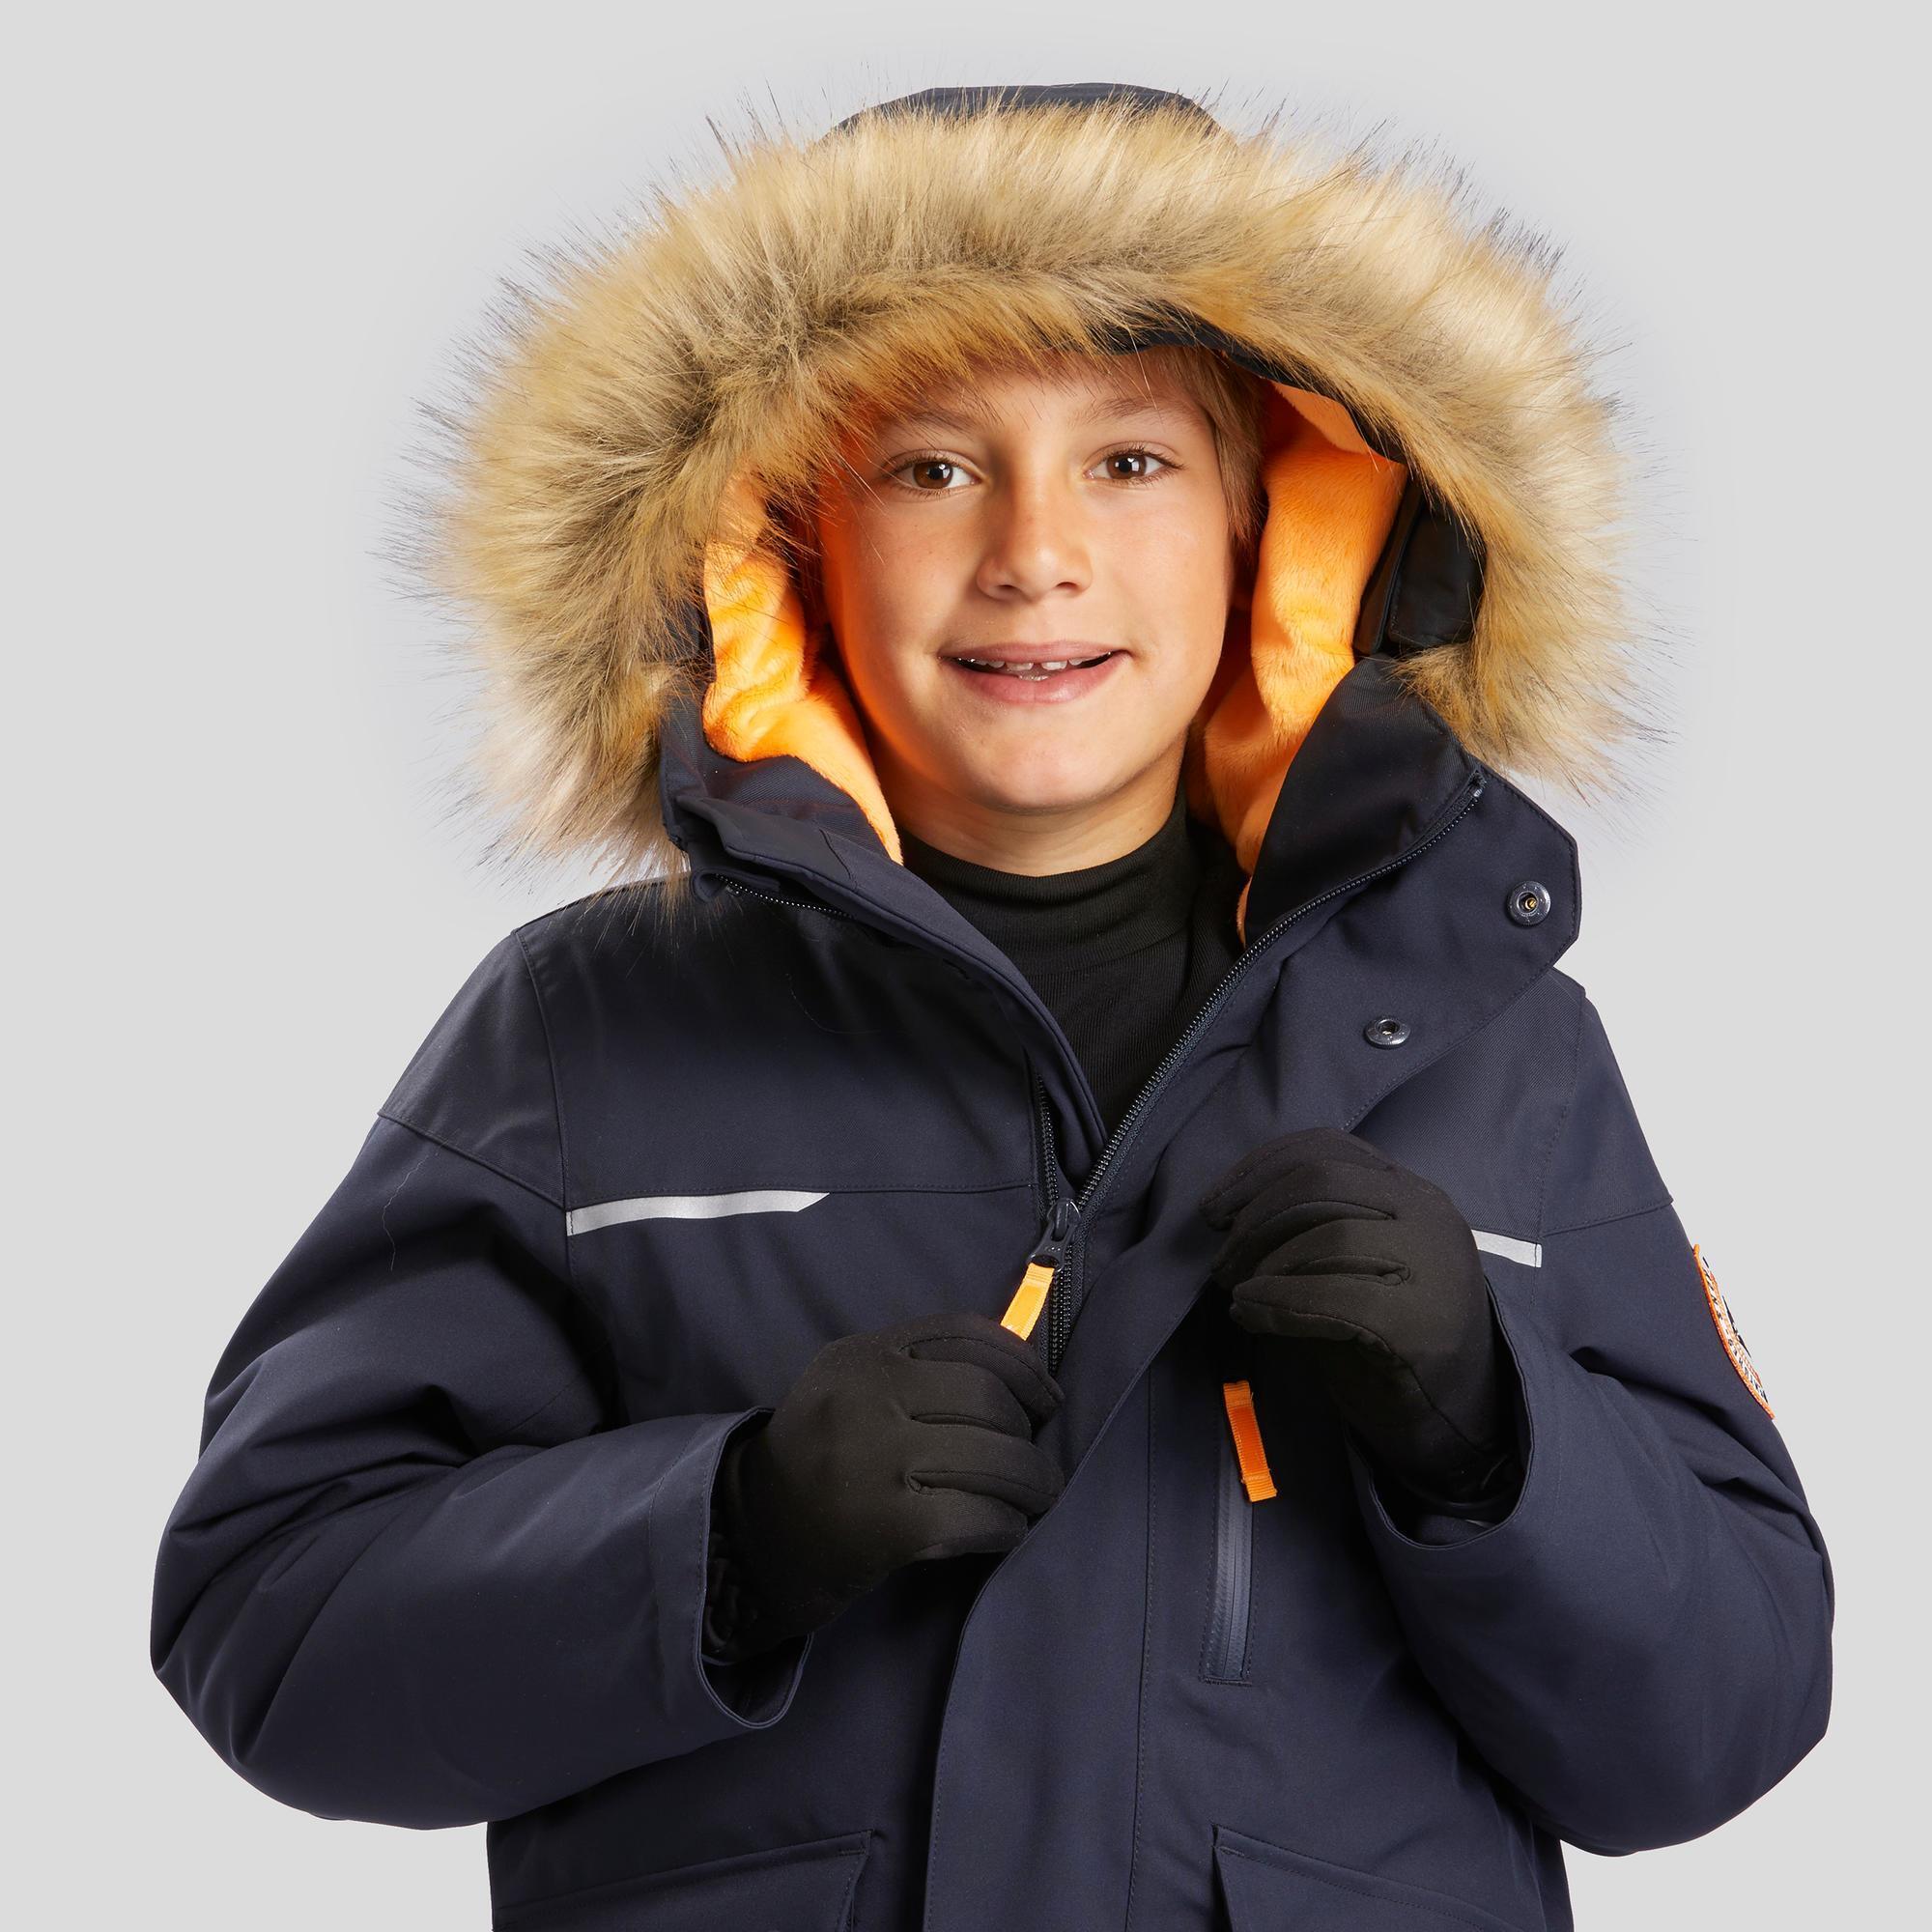 KIDS’ WARM AND WATERPROOF HIKING PARKA - SH900 -23°C - 7-15 YEARS 5/12